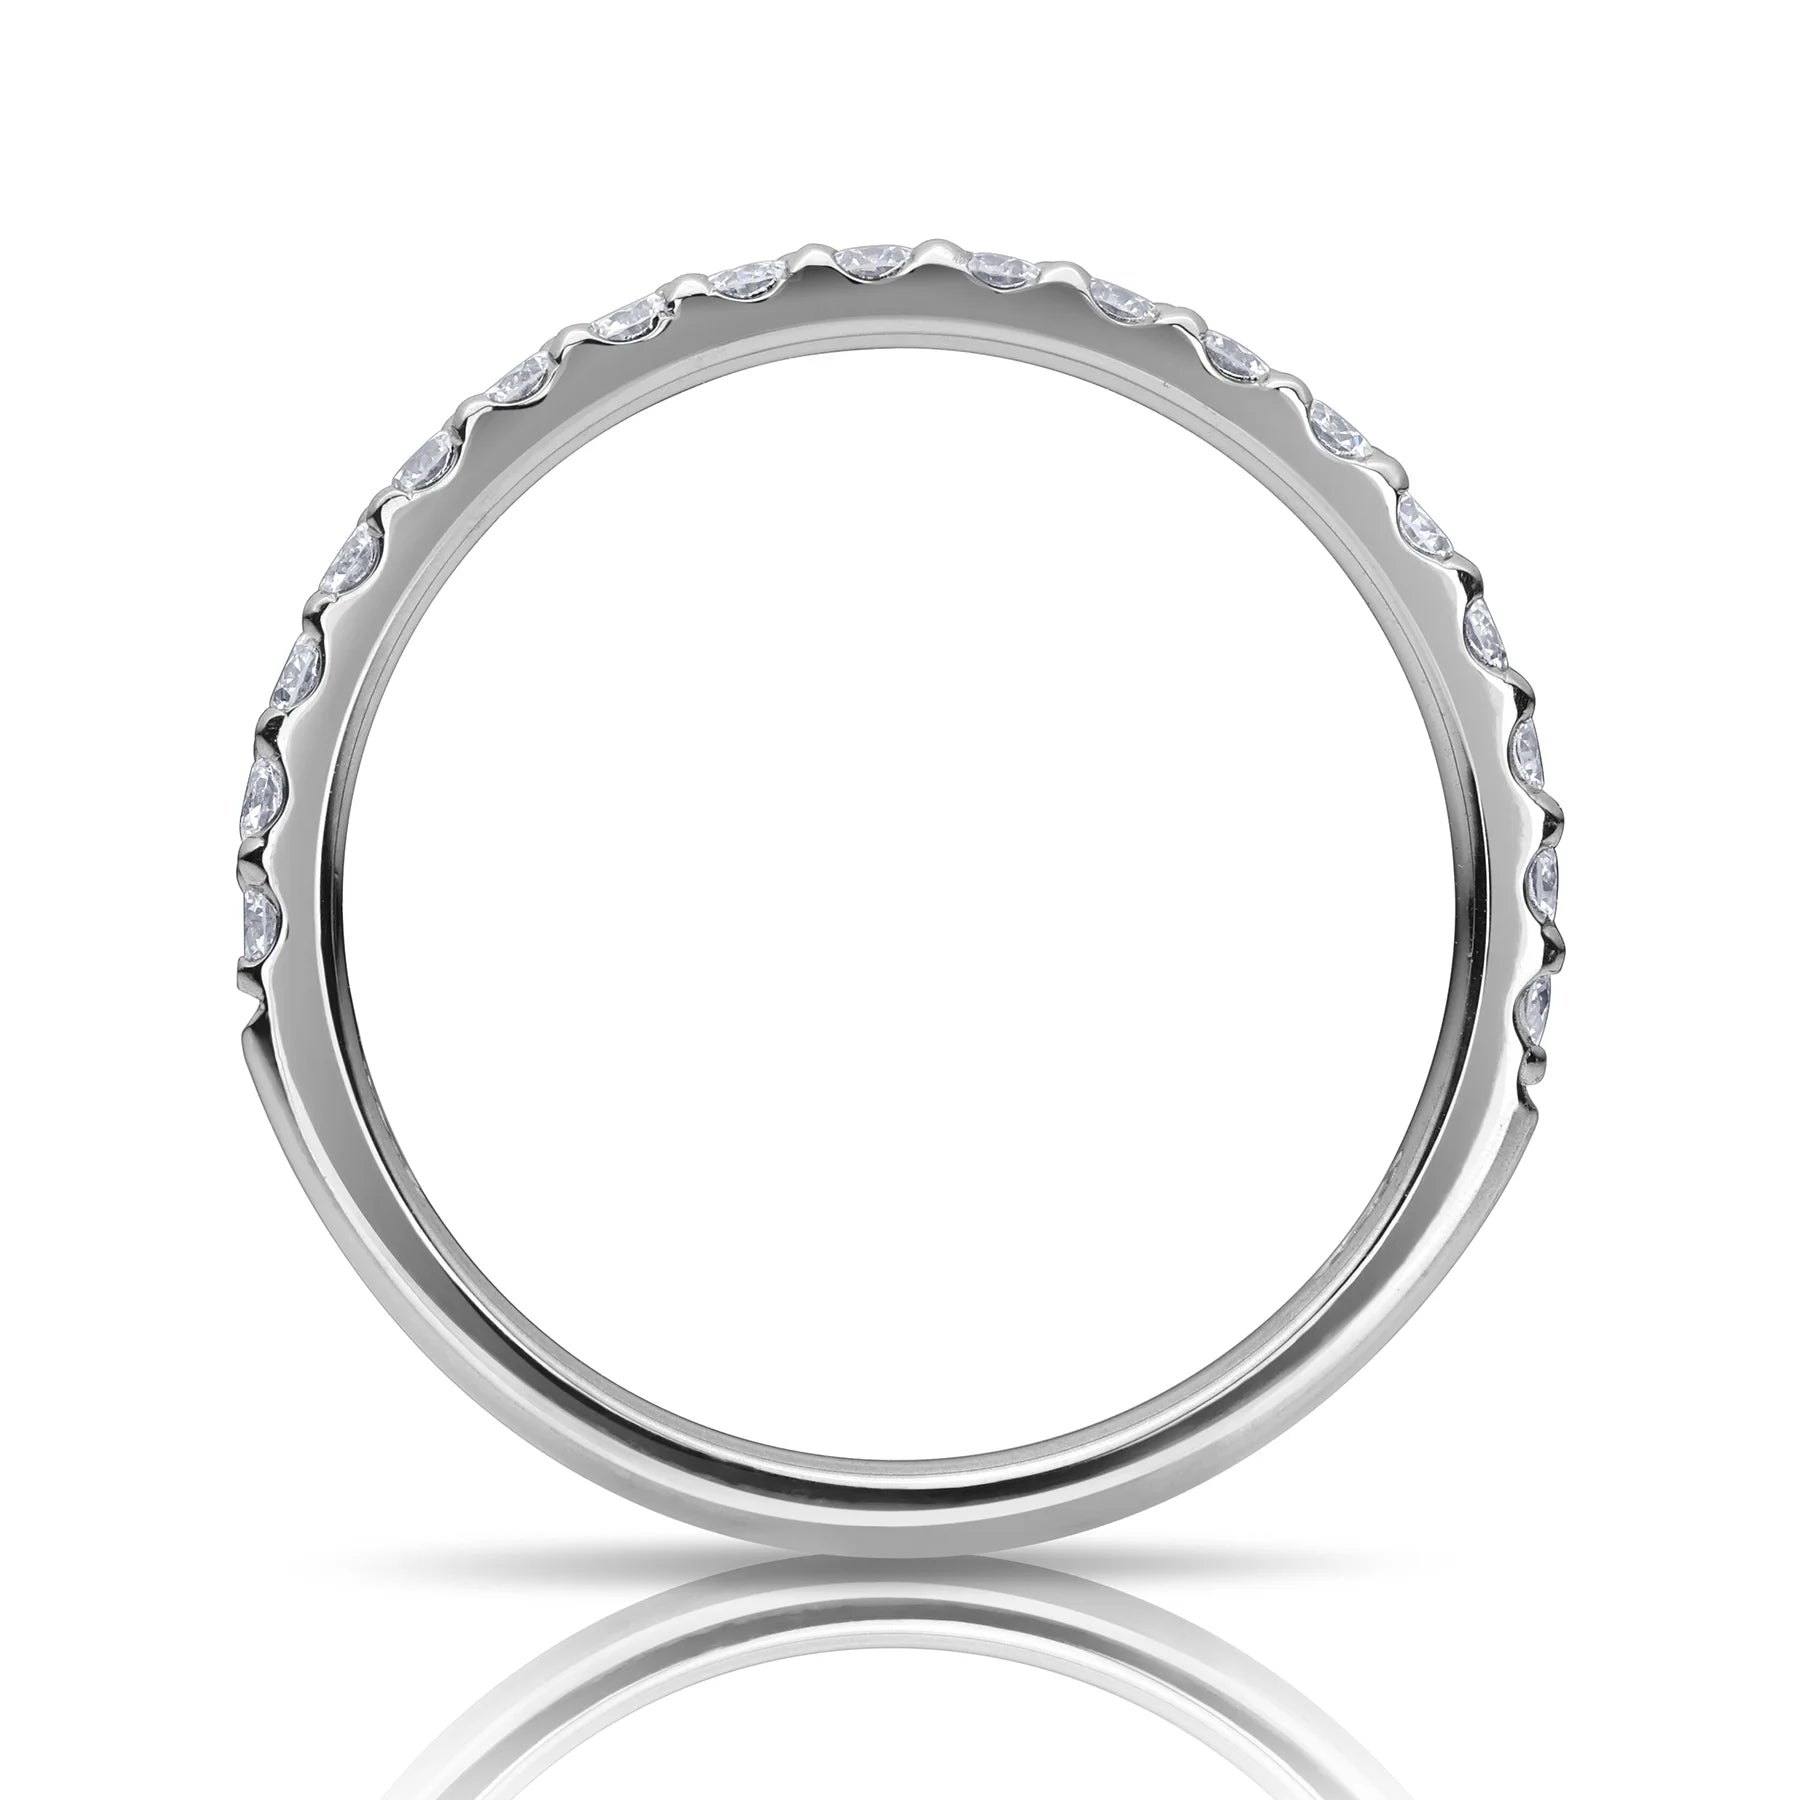 Cynthia - Wedding Ring